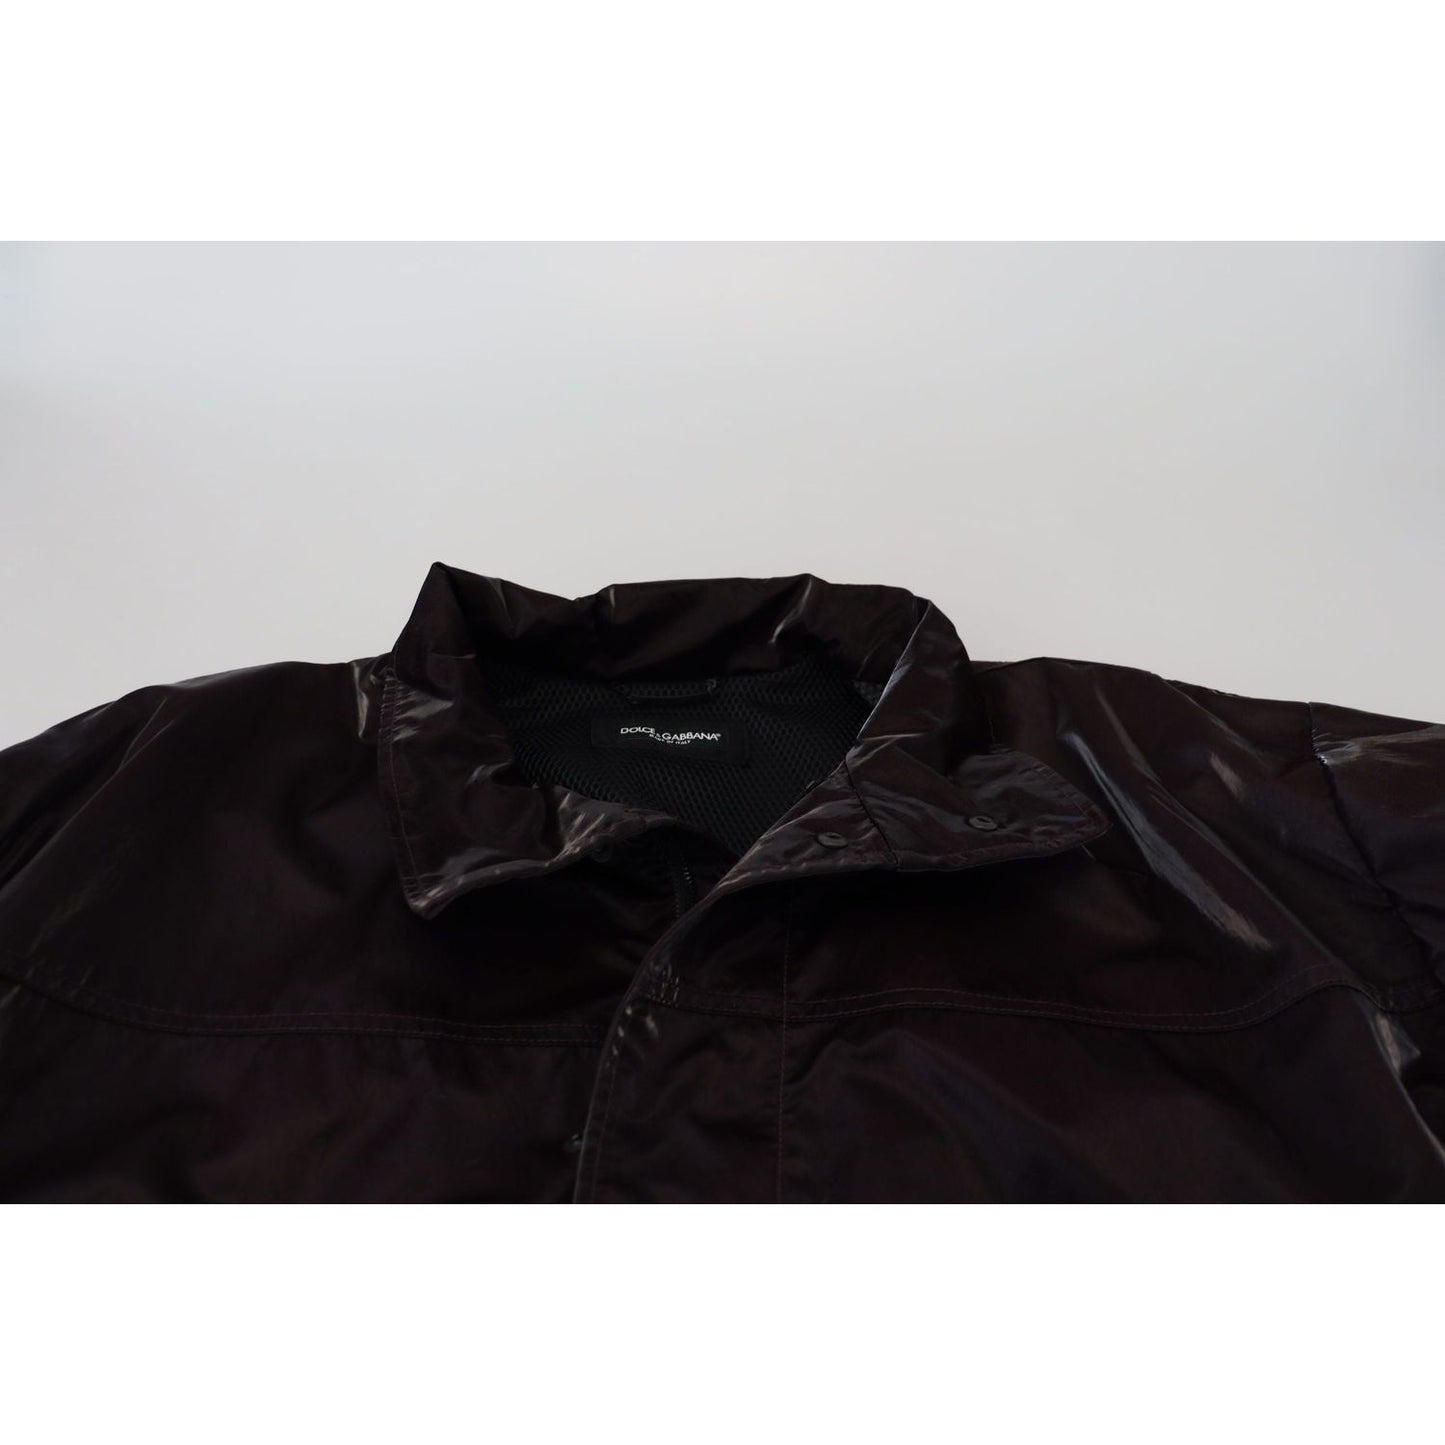 Dolce & Gabbana Elegant Bordeaux Collared Jacket bordeaux-nylon-collared-men-coat-jacket IMG_8282-scaled-0aa37fdd-b99.jpg